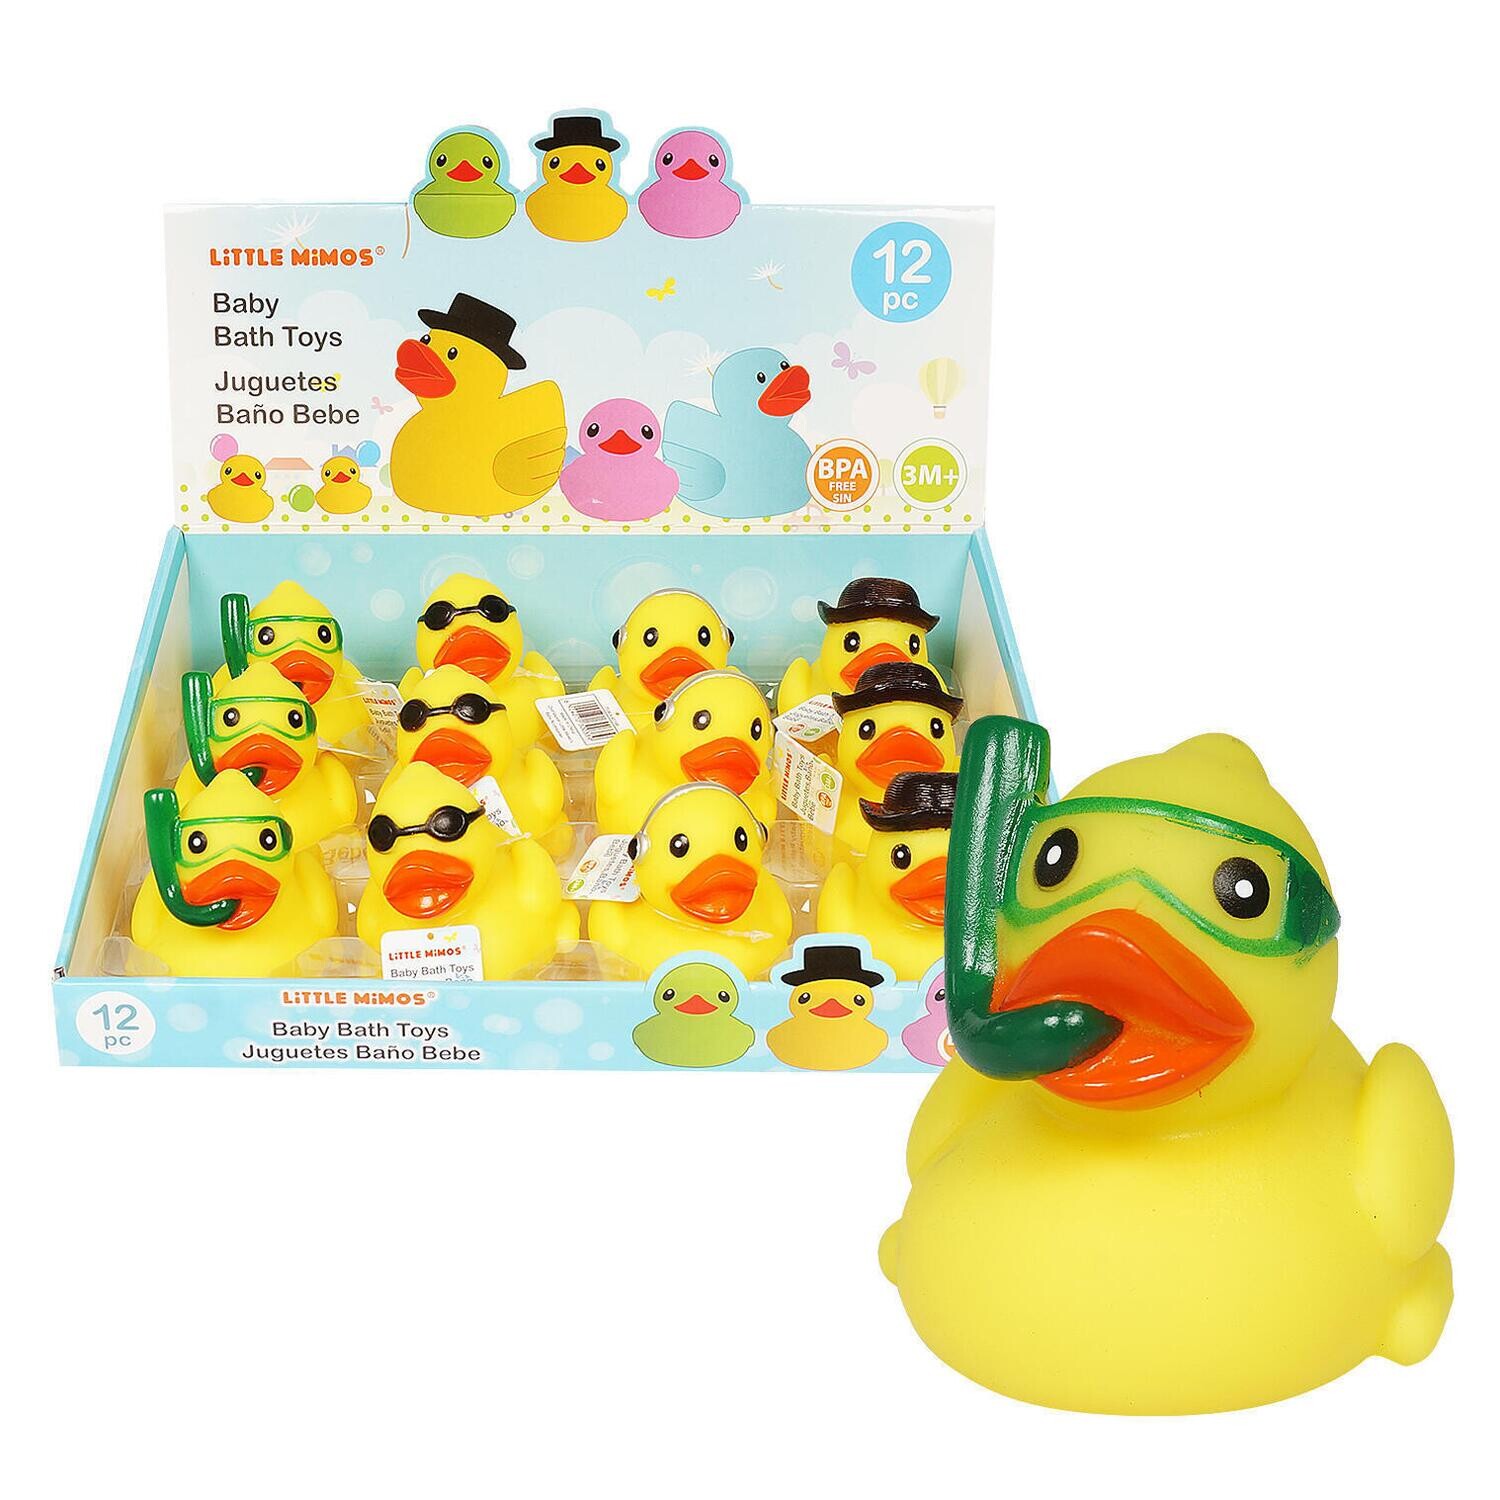 . Case of [96] Little Mimos Rubber Ducky Bath Toys - Countertop Display .